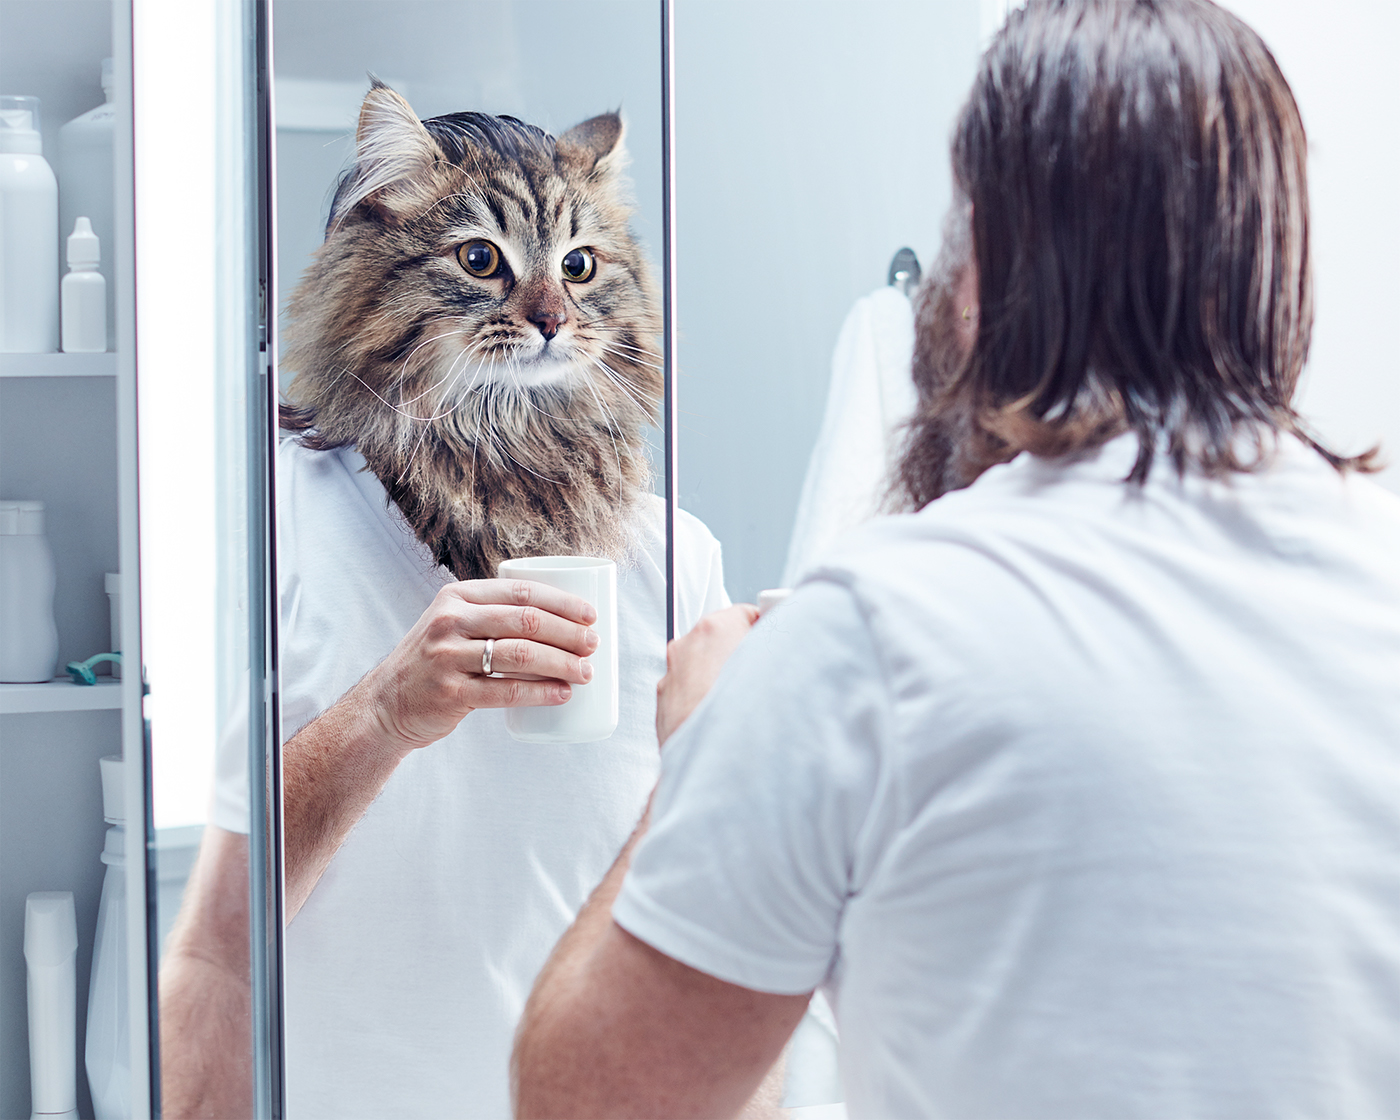 Pet dog Cat healthcare portrait bathroom mirror animal head headswap